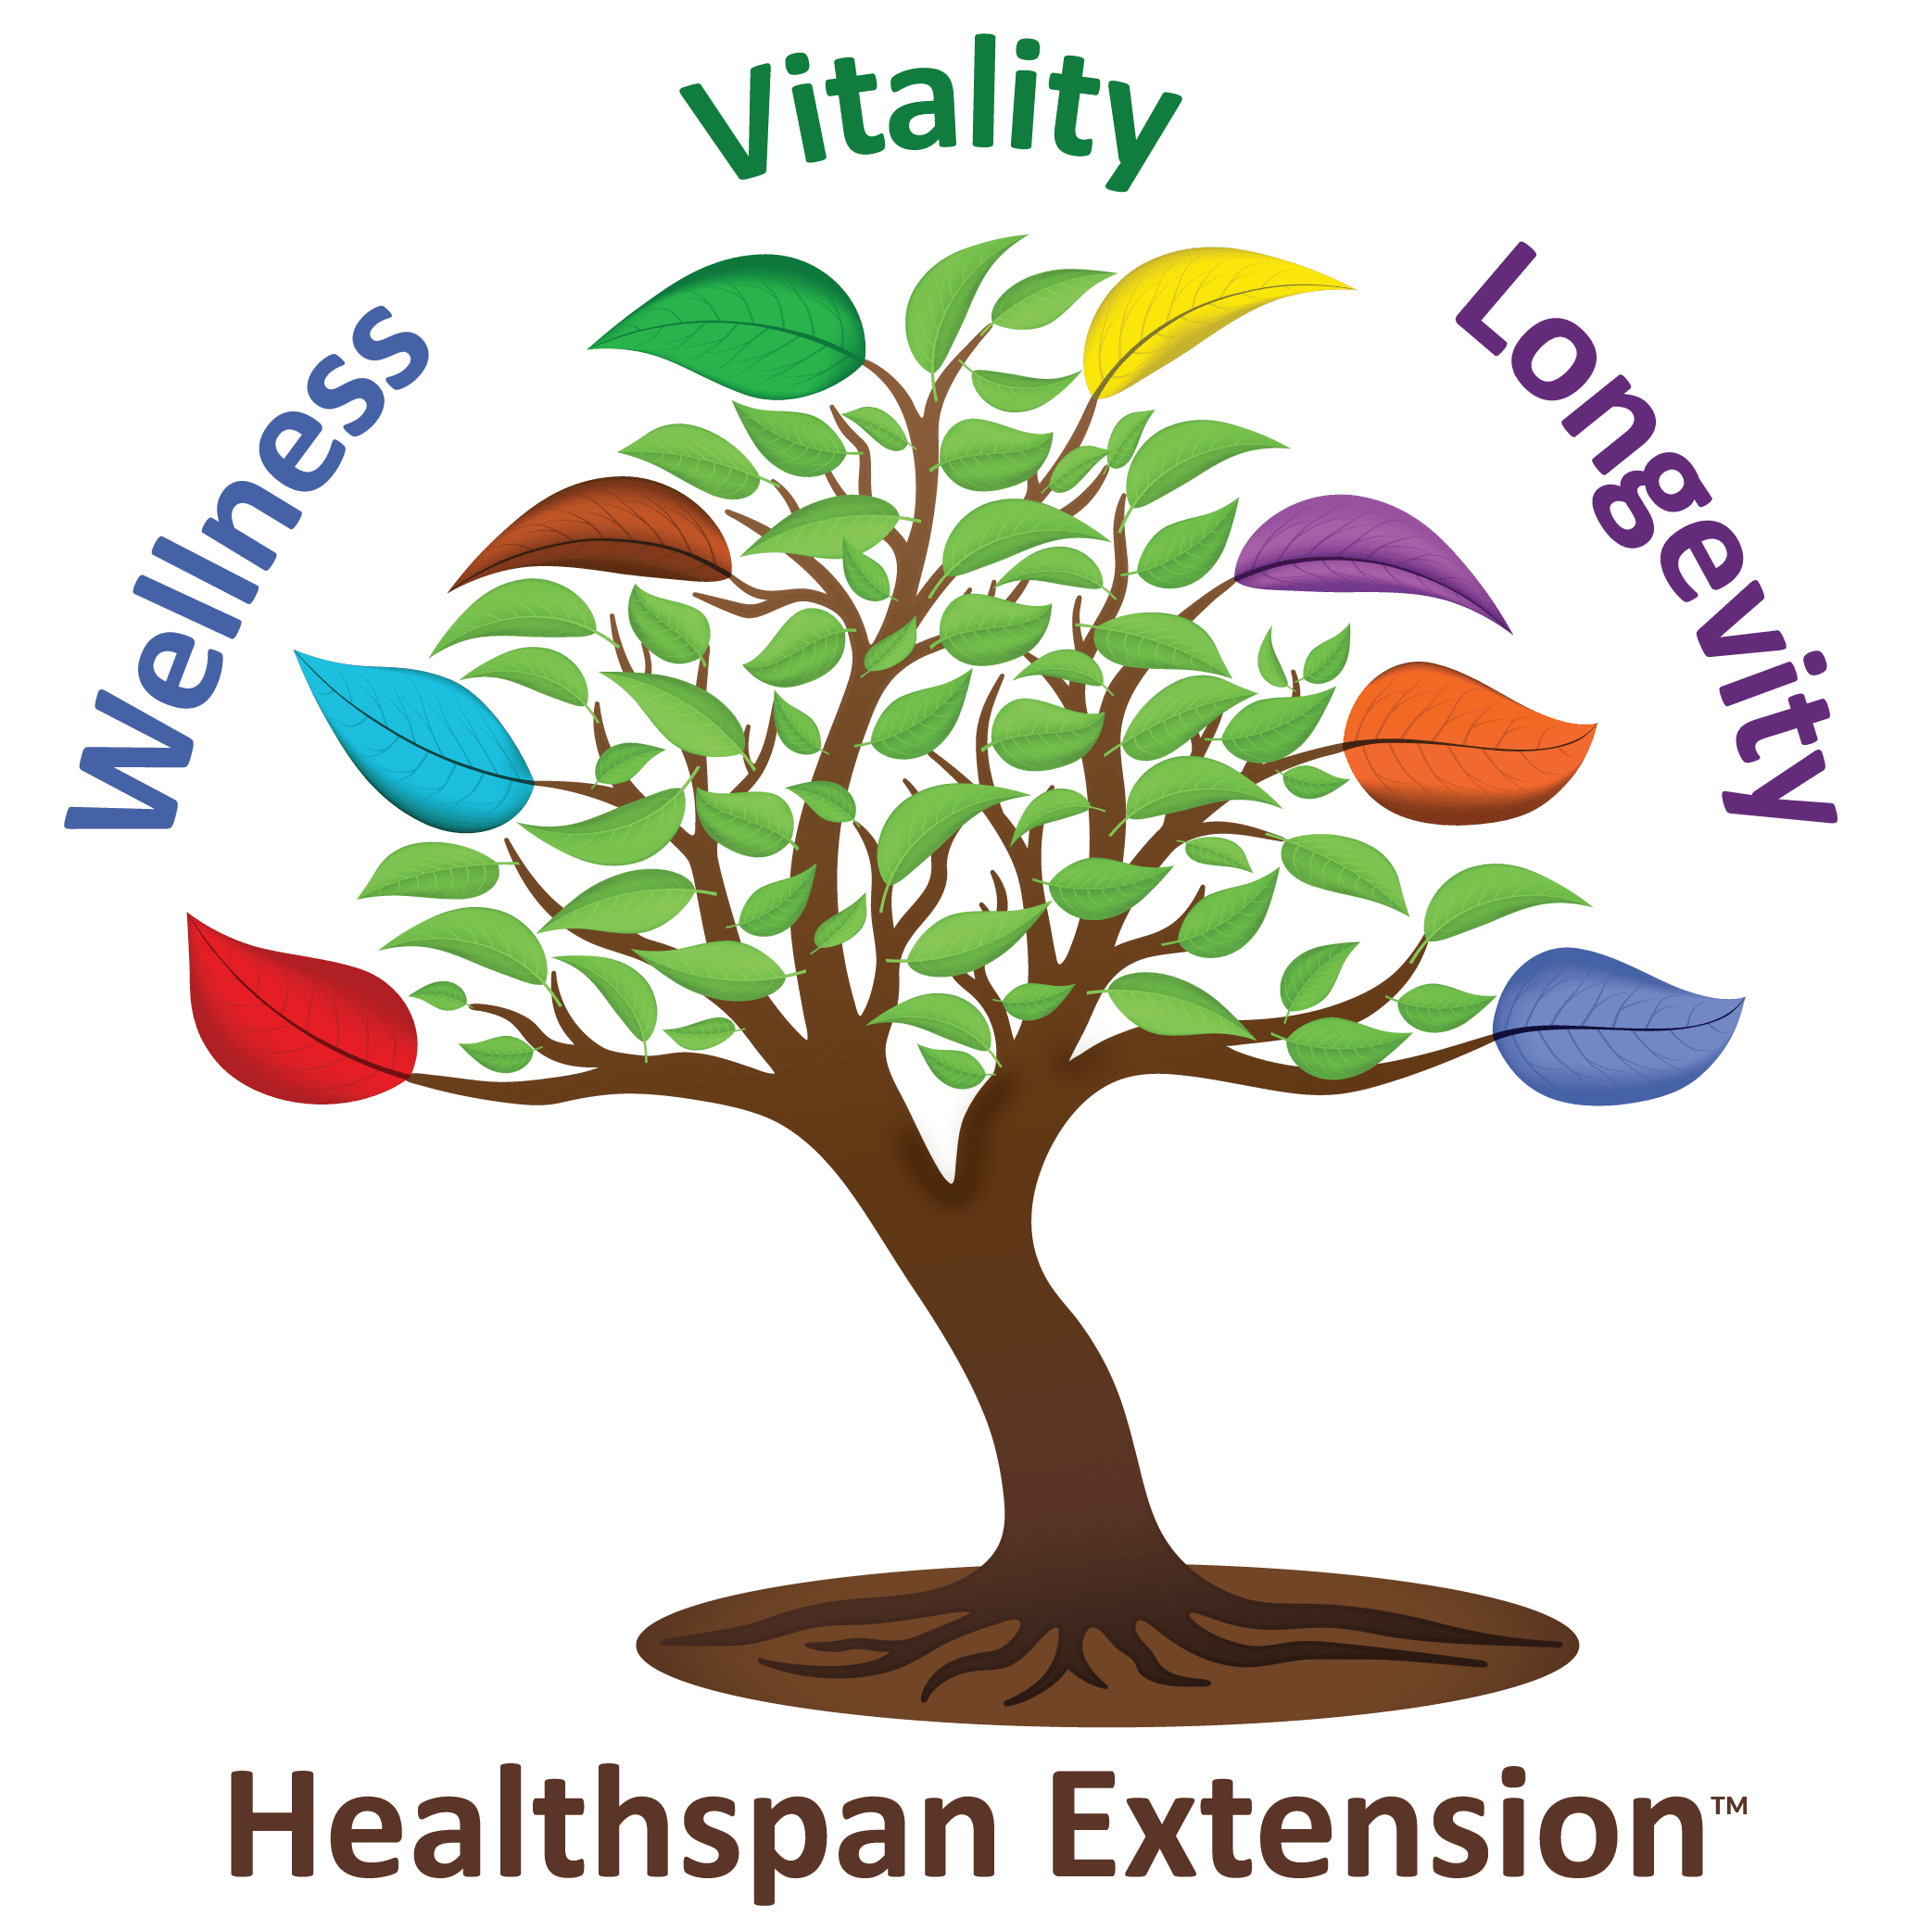 Healthspan Extension™